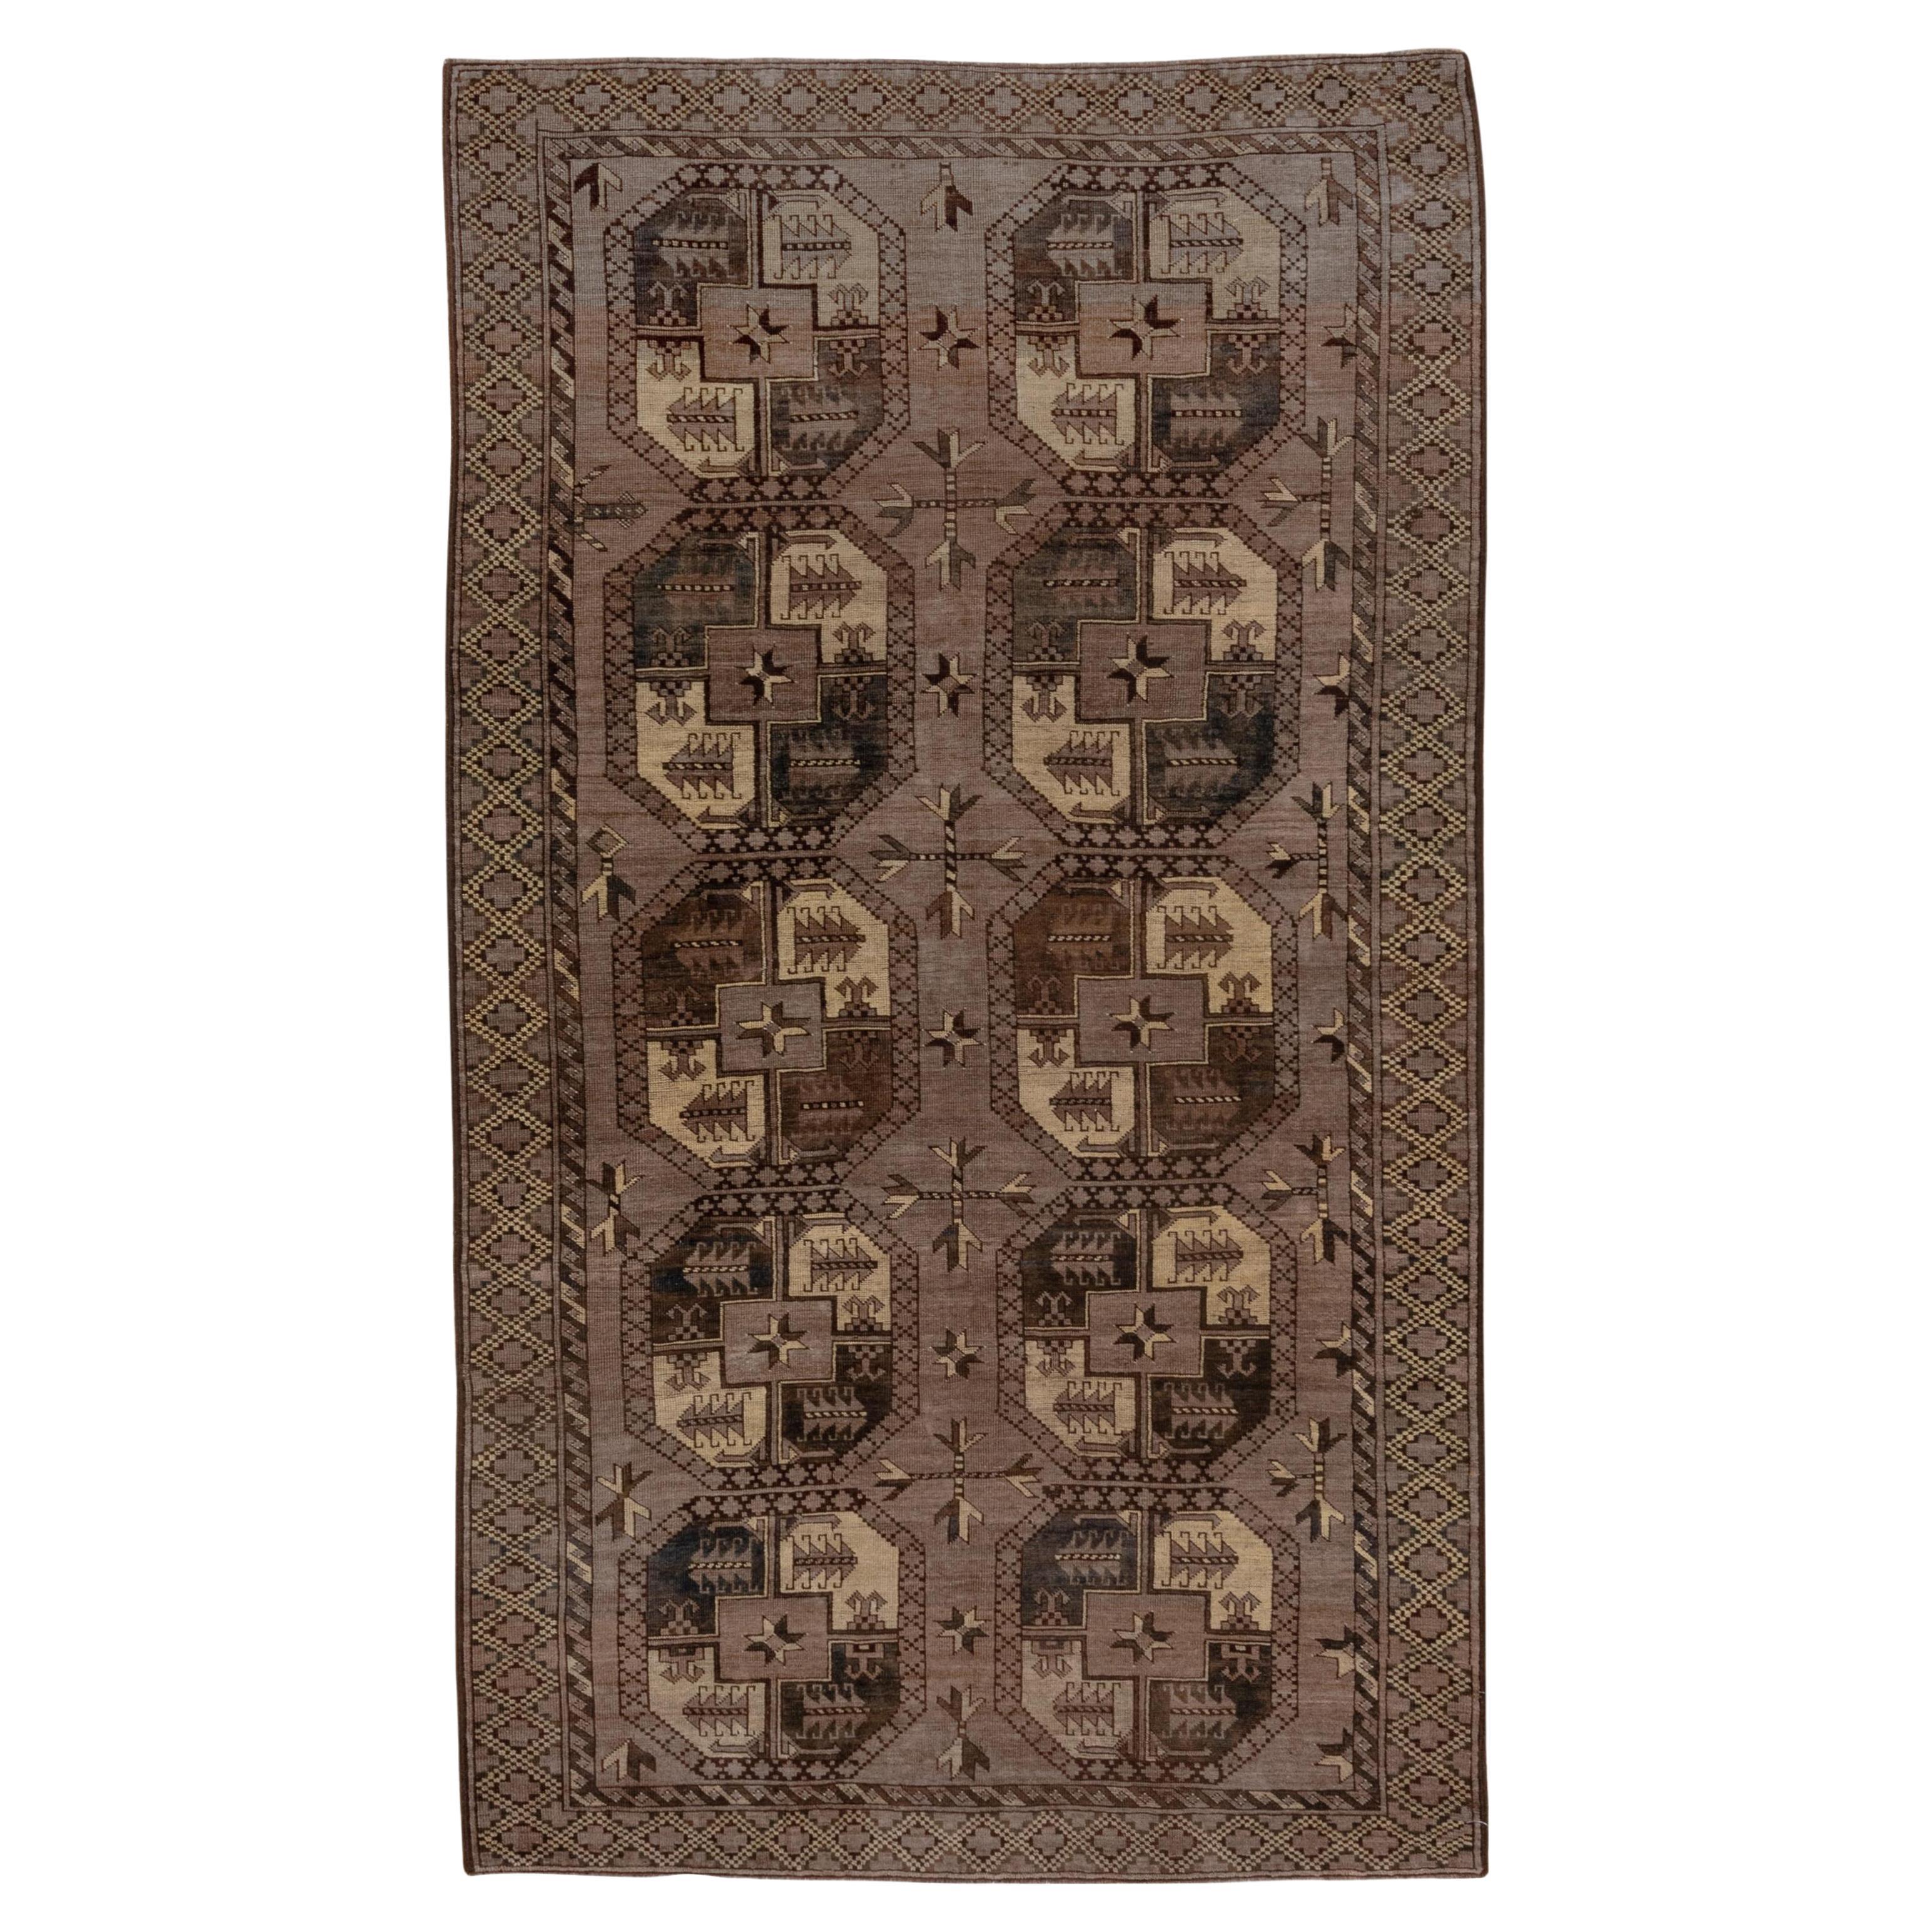 Antique Brown Afghan Ersari Carpet, Brown Tones, Allover Field, Gold Tones